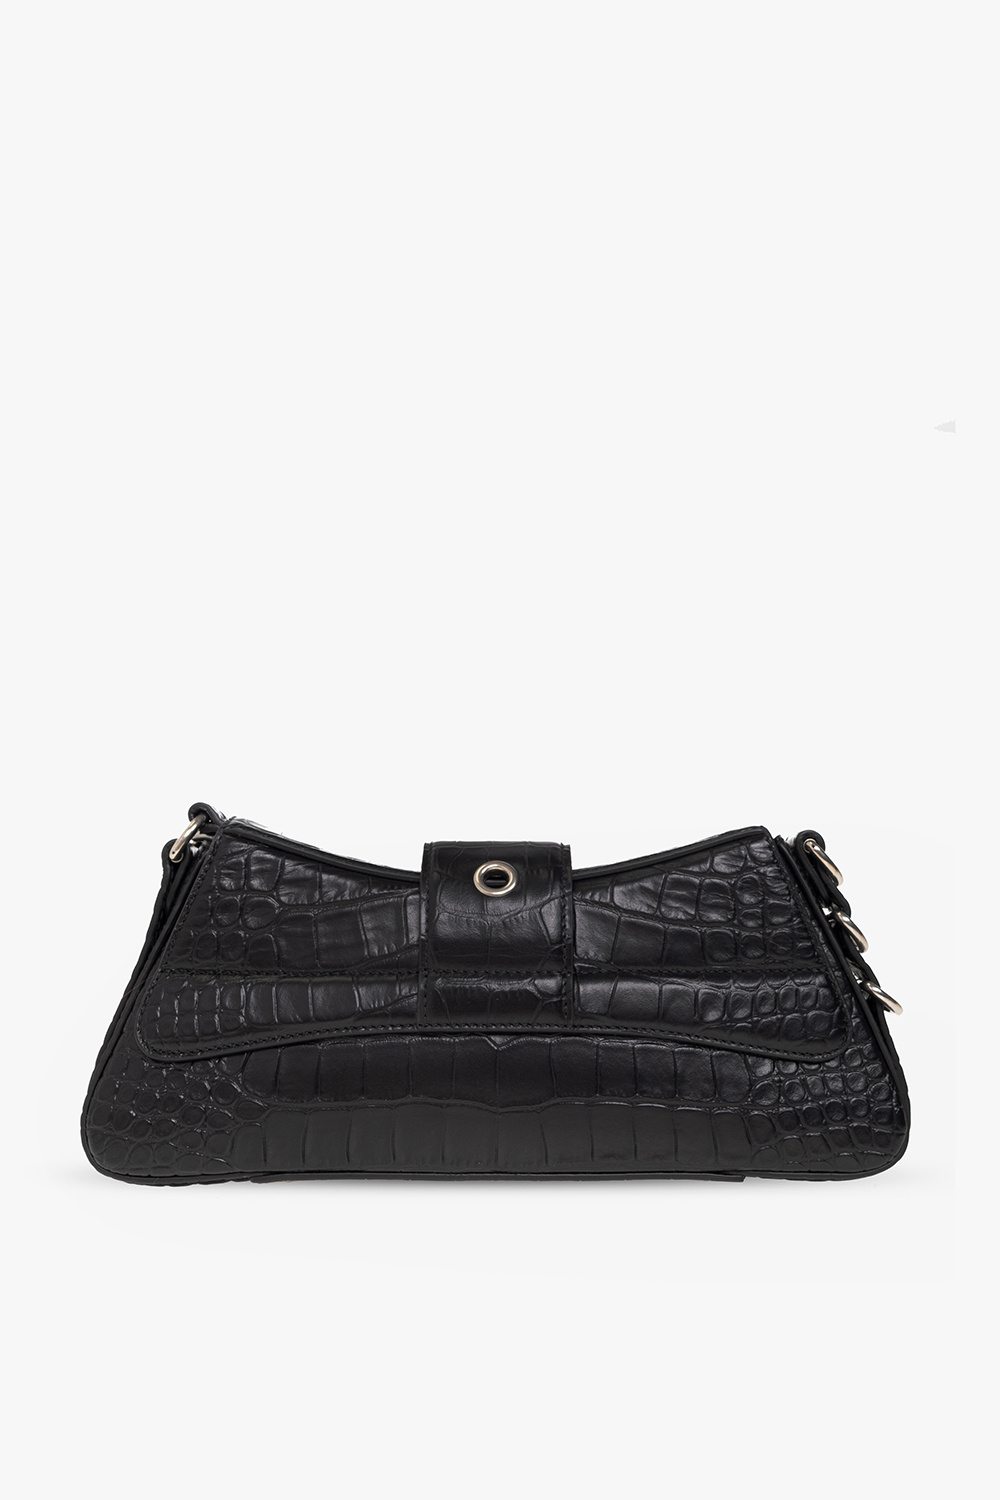 IetpShops Denmark - Comes in an adorable cosmetic bag - Black \'Lindsay Small\'  shoulder bag Balenciaga